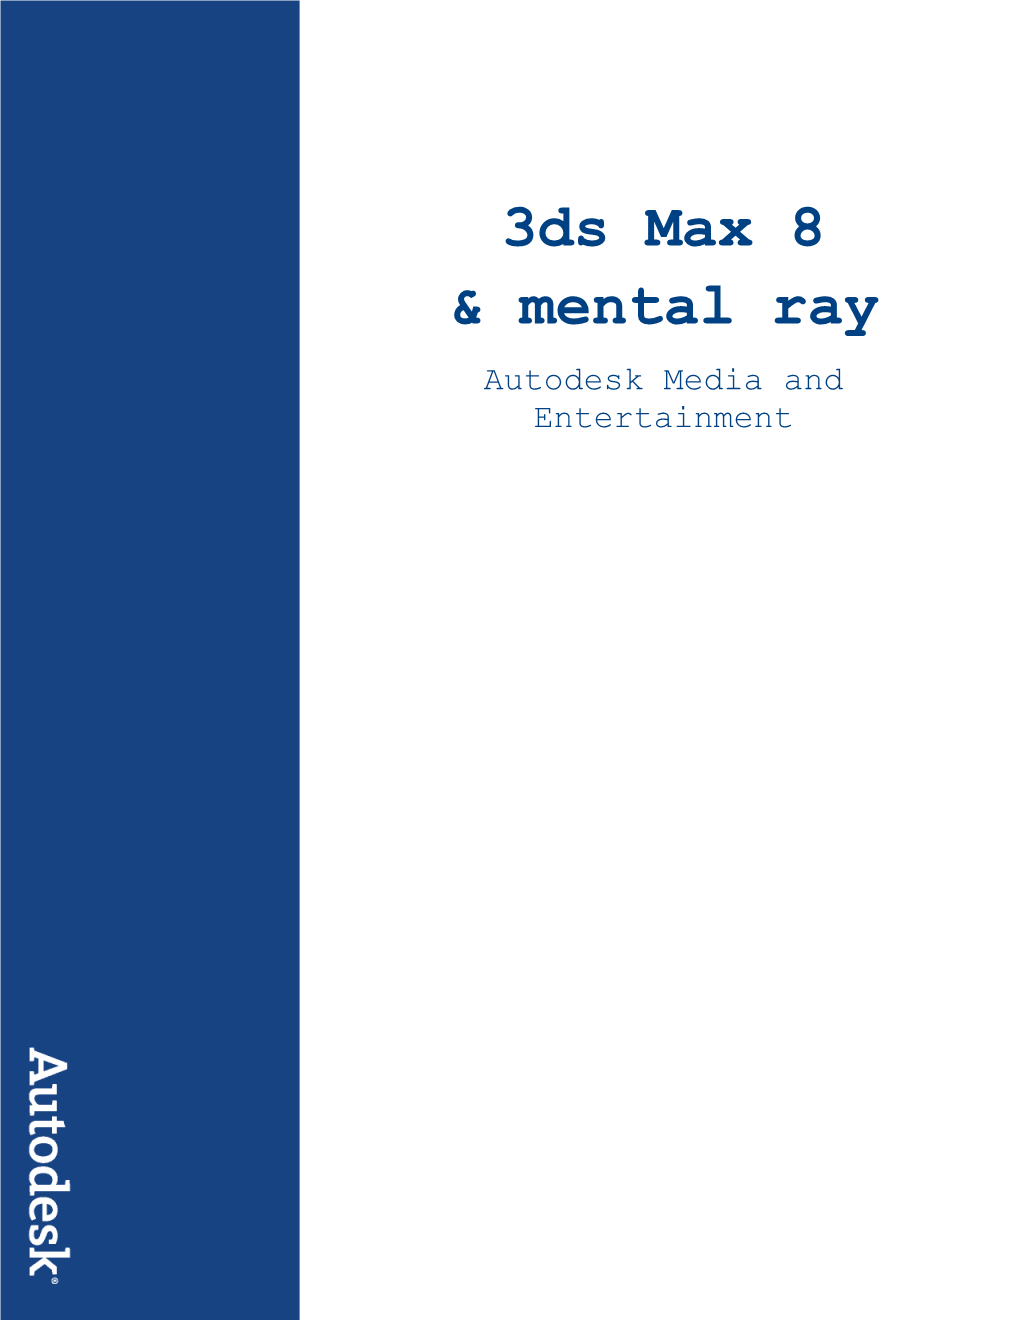 3Ds Max 8 & Mental